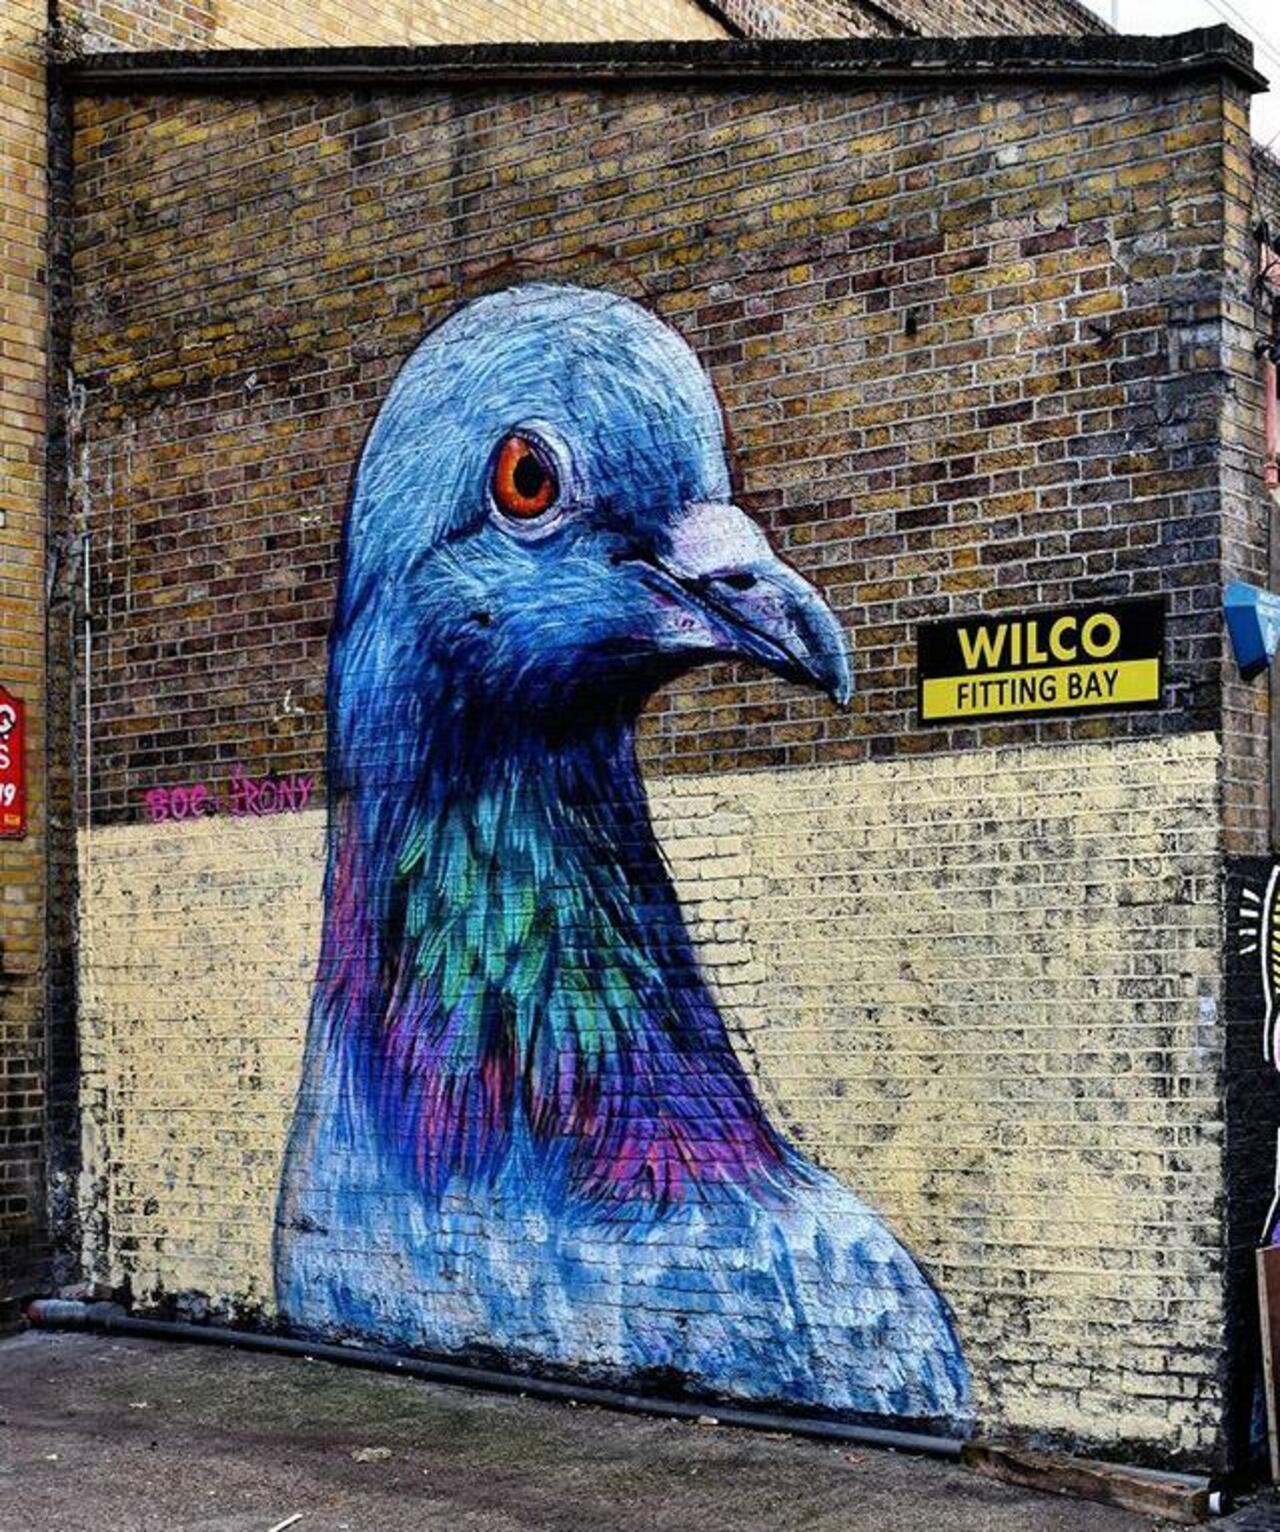 ＠rzzp ＠kanta_1123 だいすきよー　Street Art by Placee Boe & whoamirony in London 

#art #graffiti #mural #streetart http://t.co/rzCP4p9gcQ Octobe…